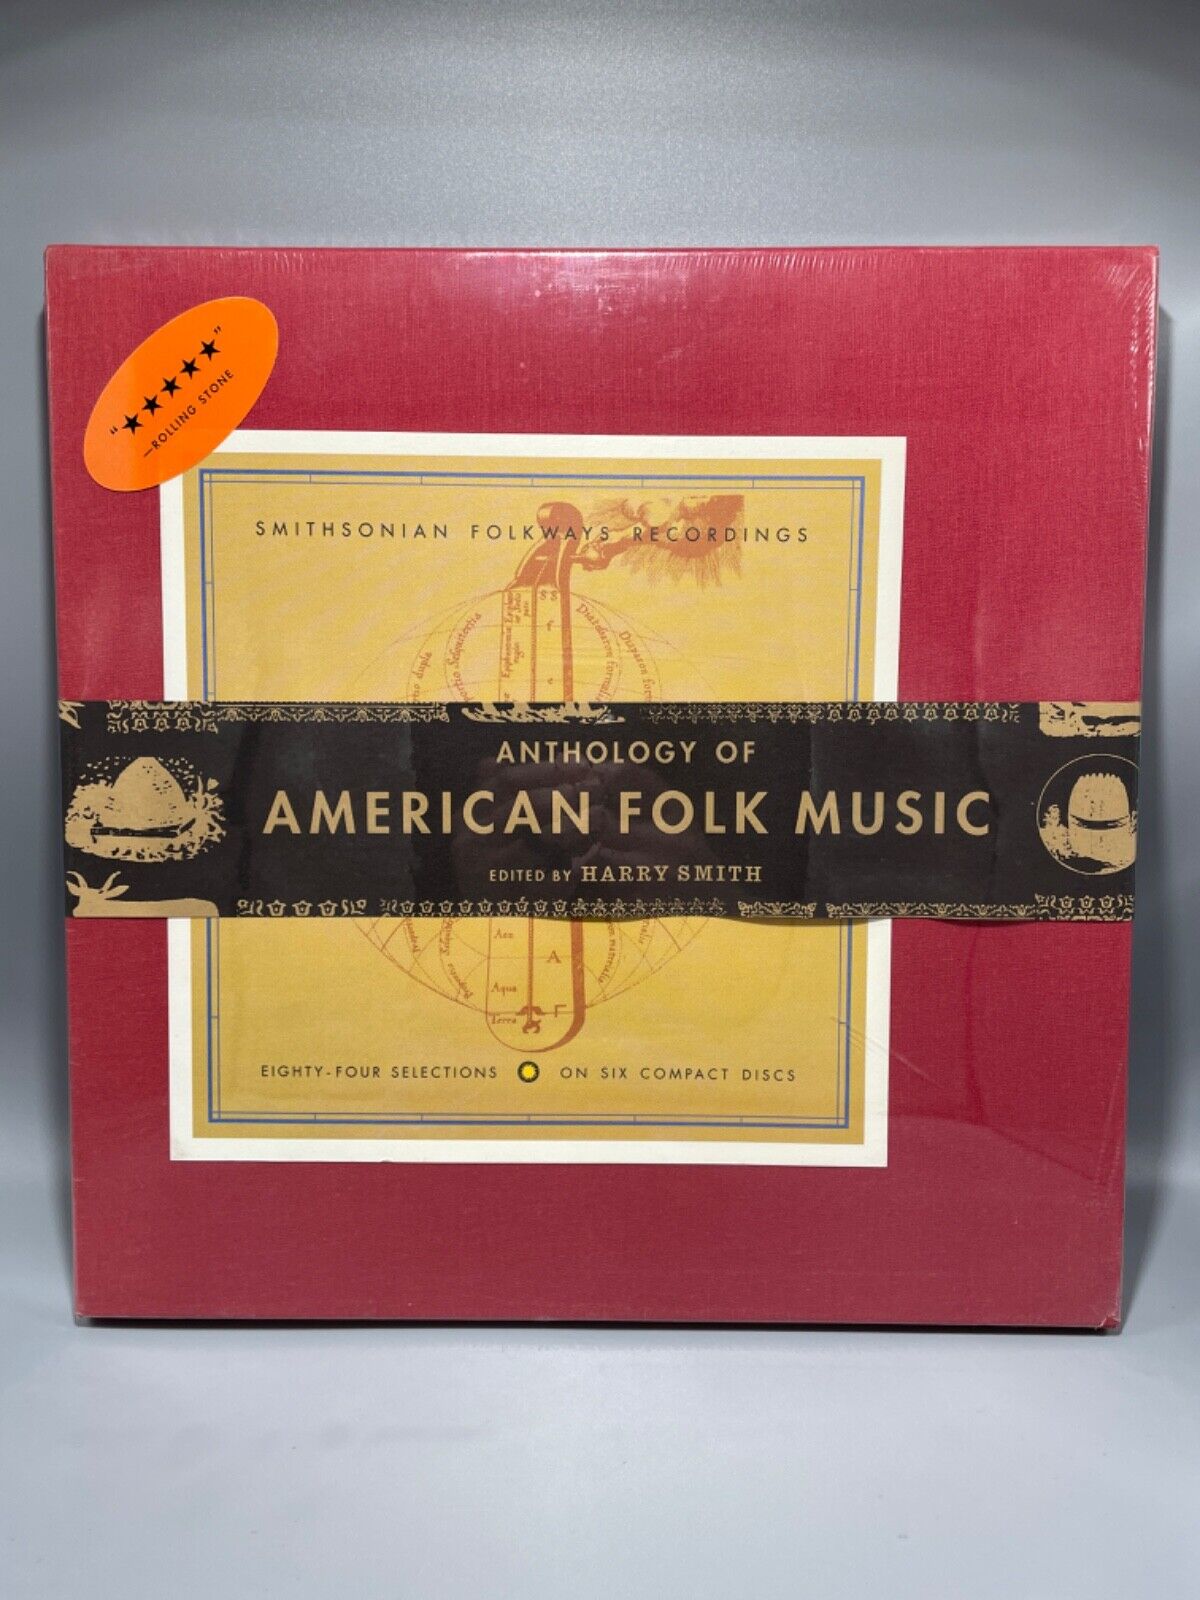 Smithsonian Folkways Recordings Anthology of American Folk Music Harry Smith CDs